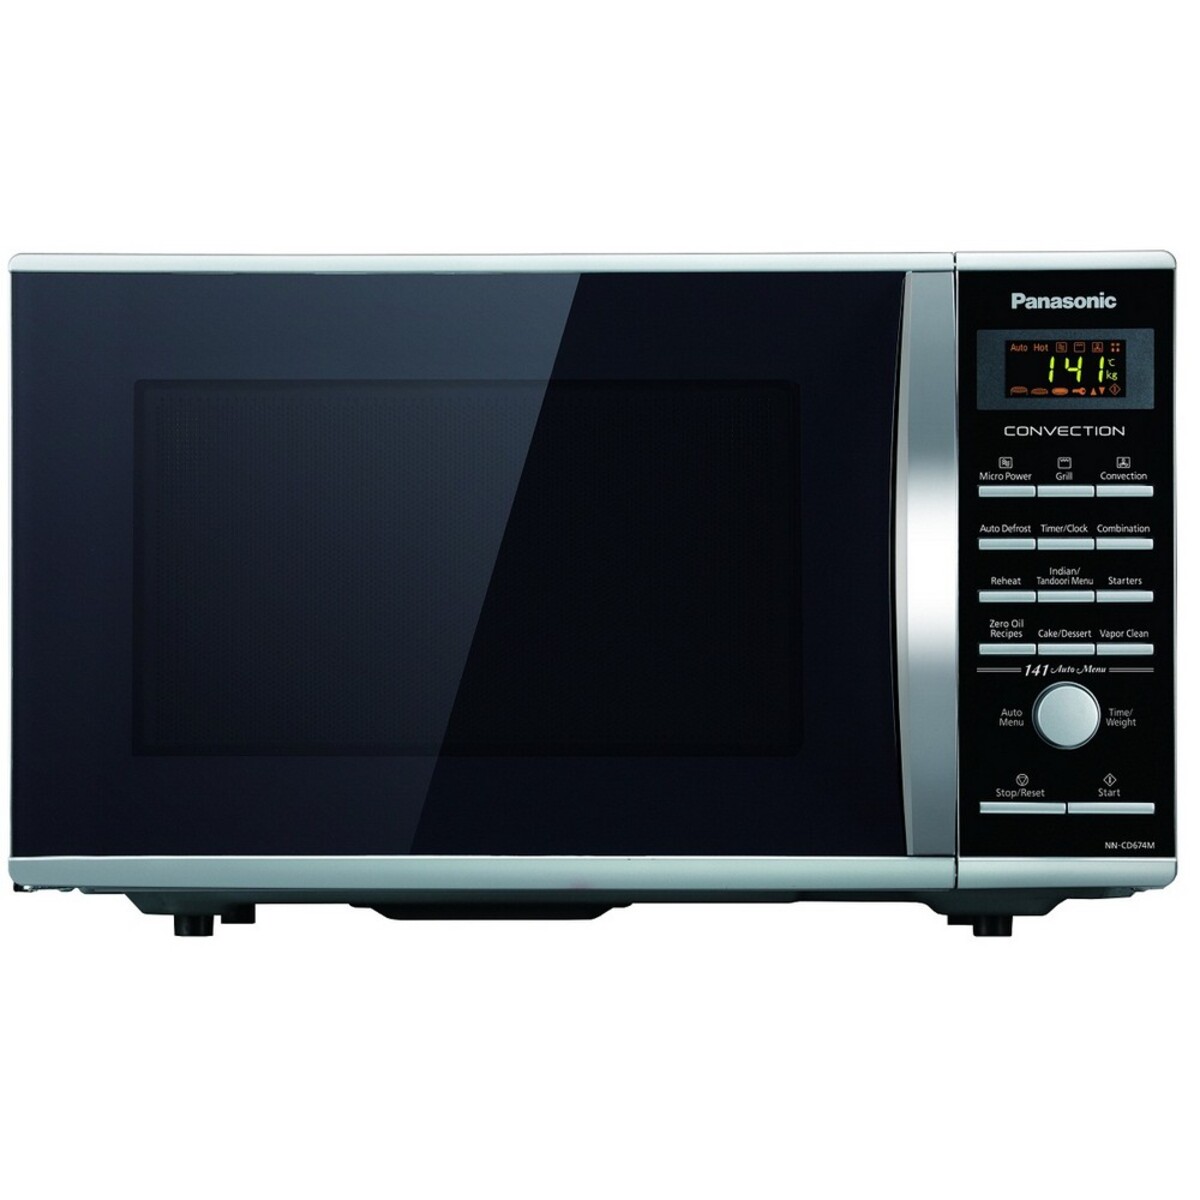 Panasonic Microwave Oven NN-CD674M 27 Ltr